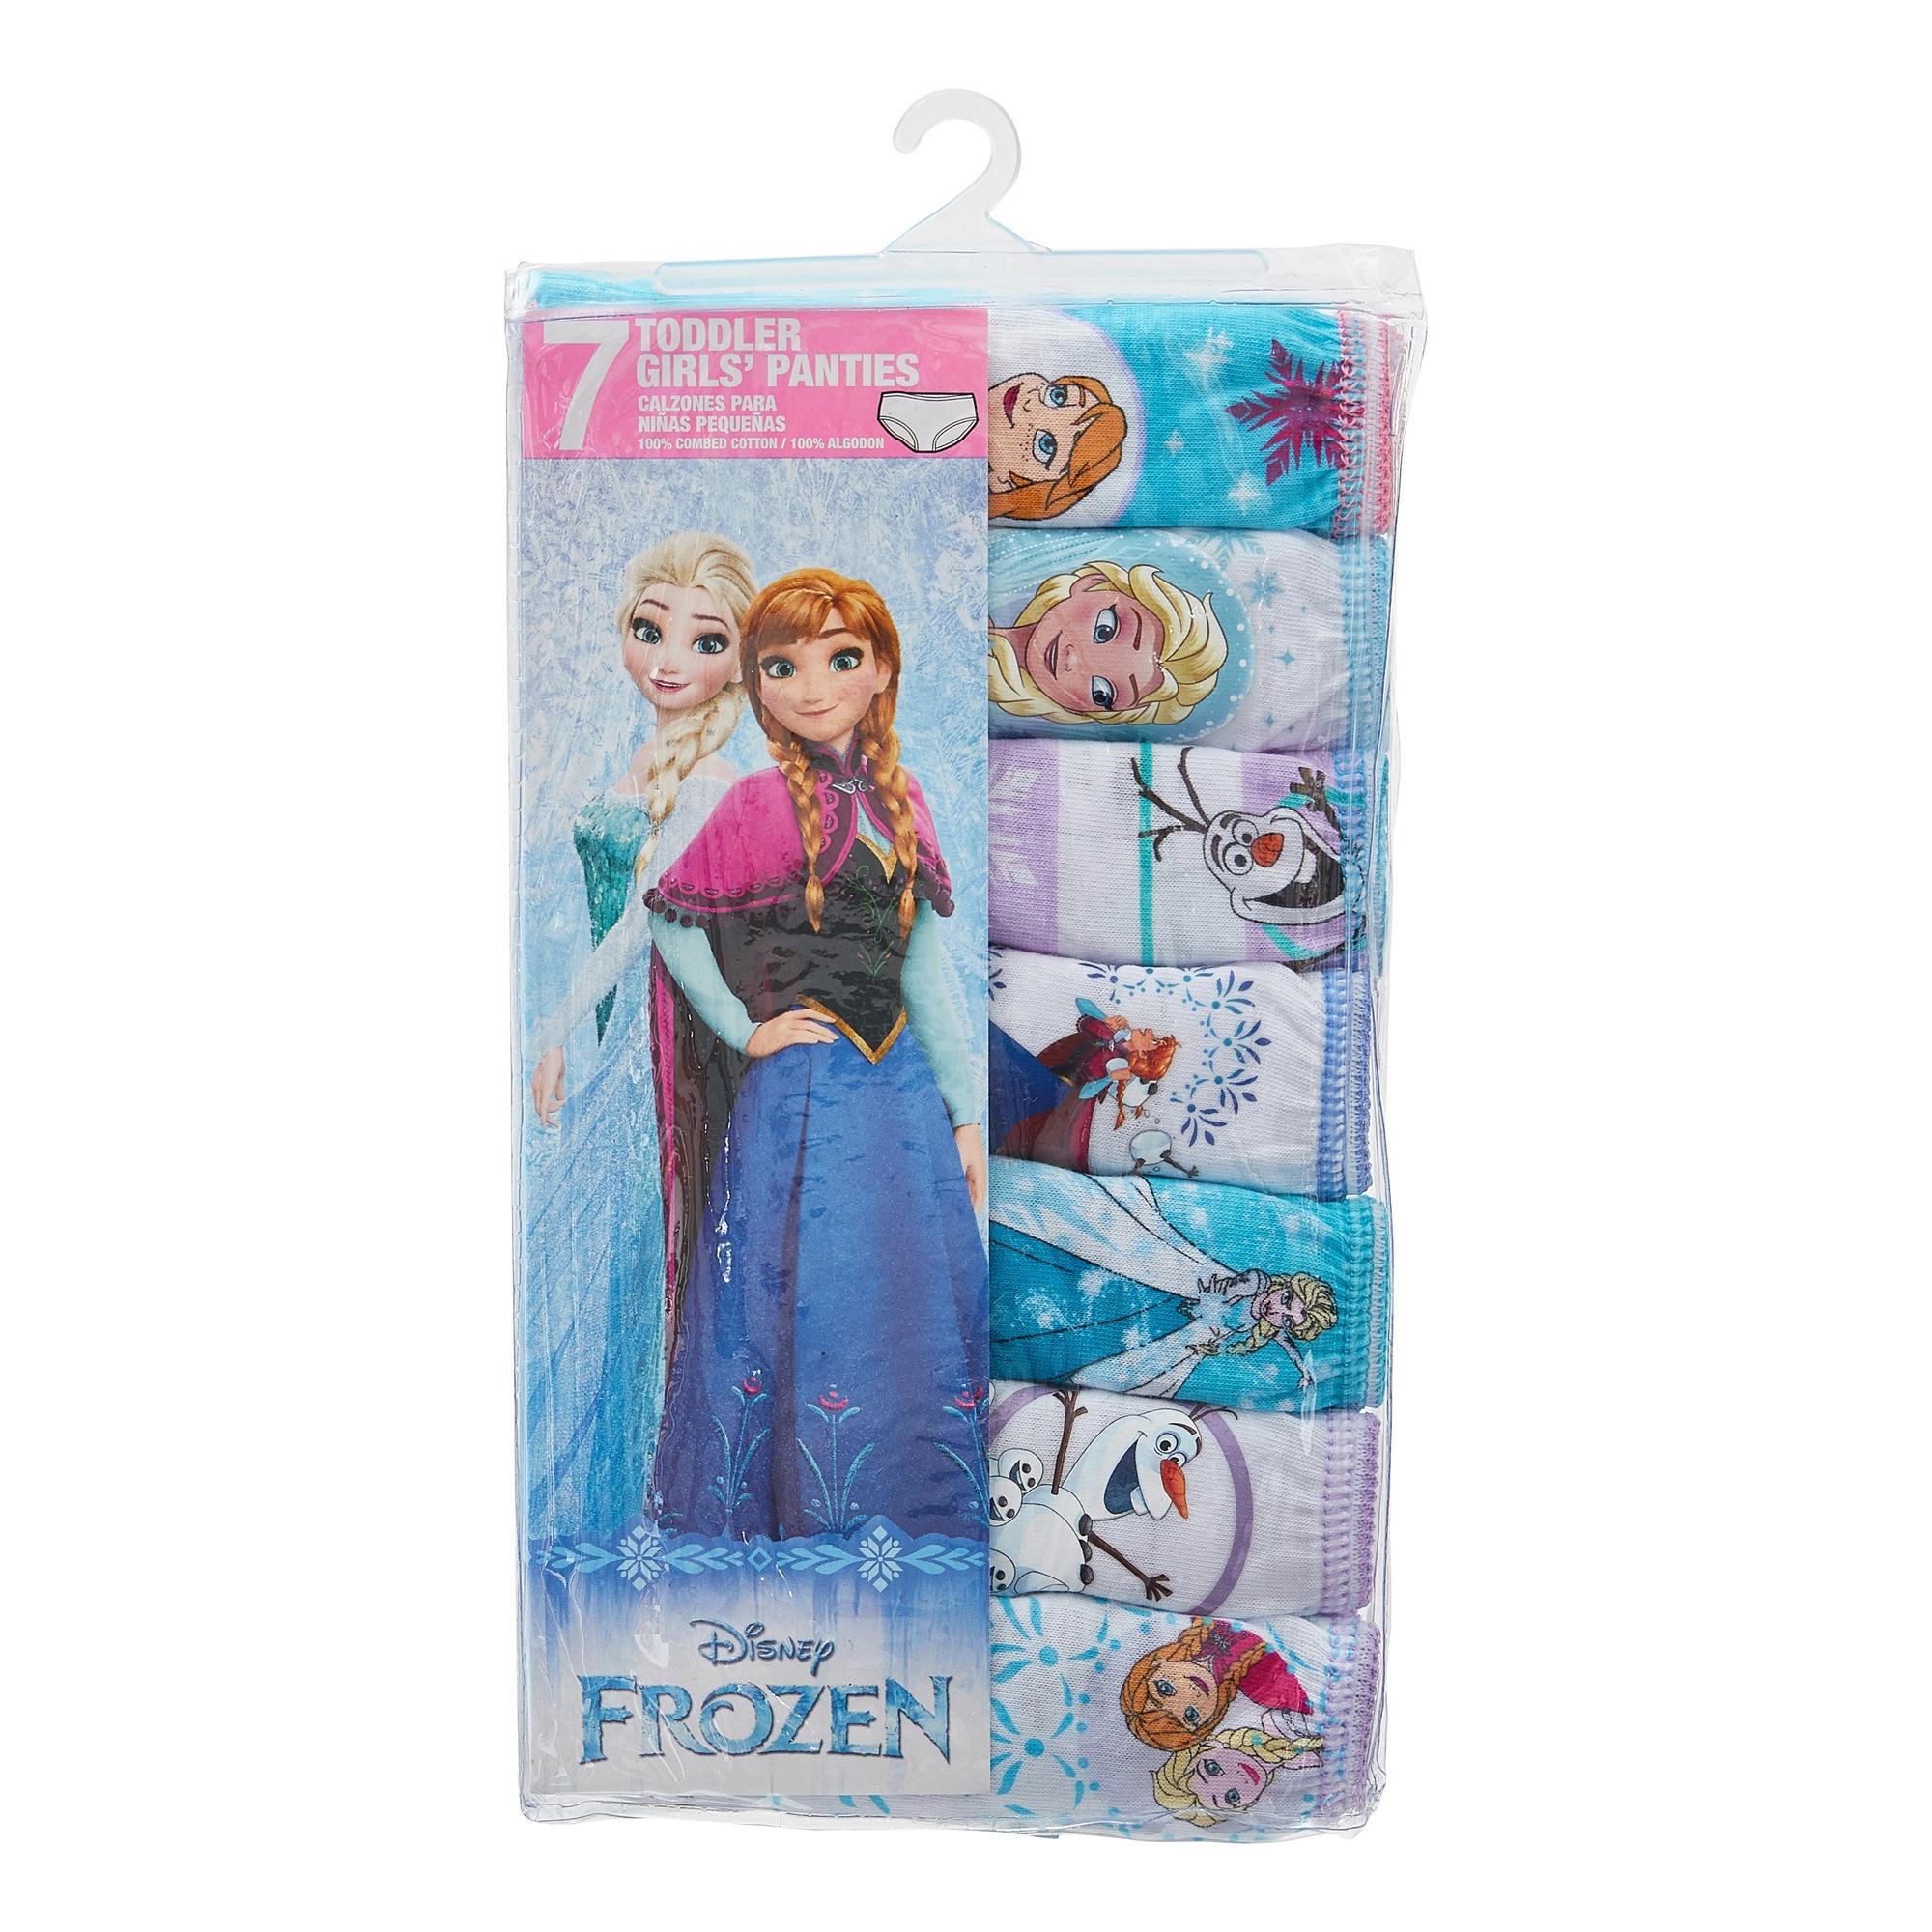 Disney Frozen Toddler Girls 7-pk. Cotton Briefs 4T Blue/purple/white - image 2 of 2